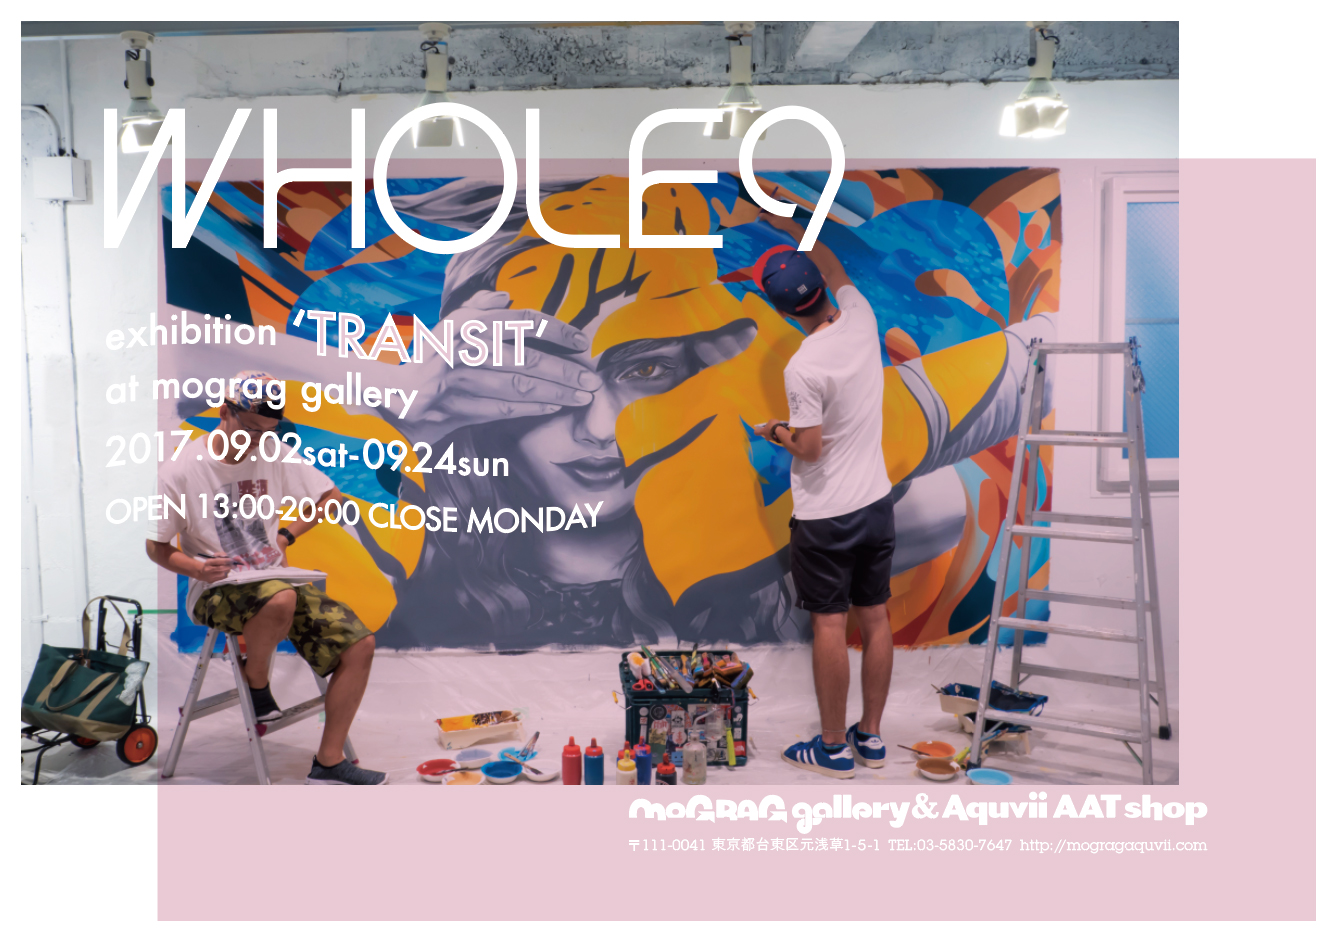 WHOLE9 exhibition『TRANSIT』